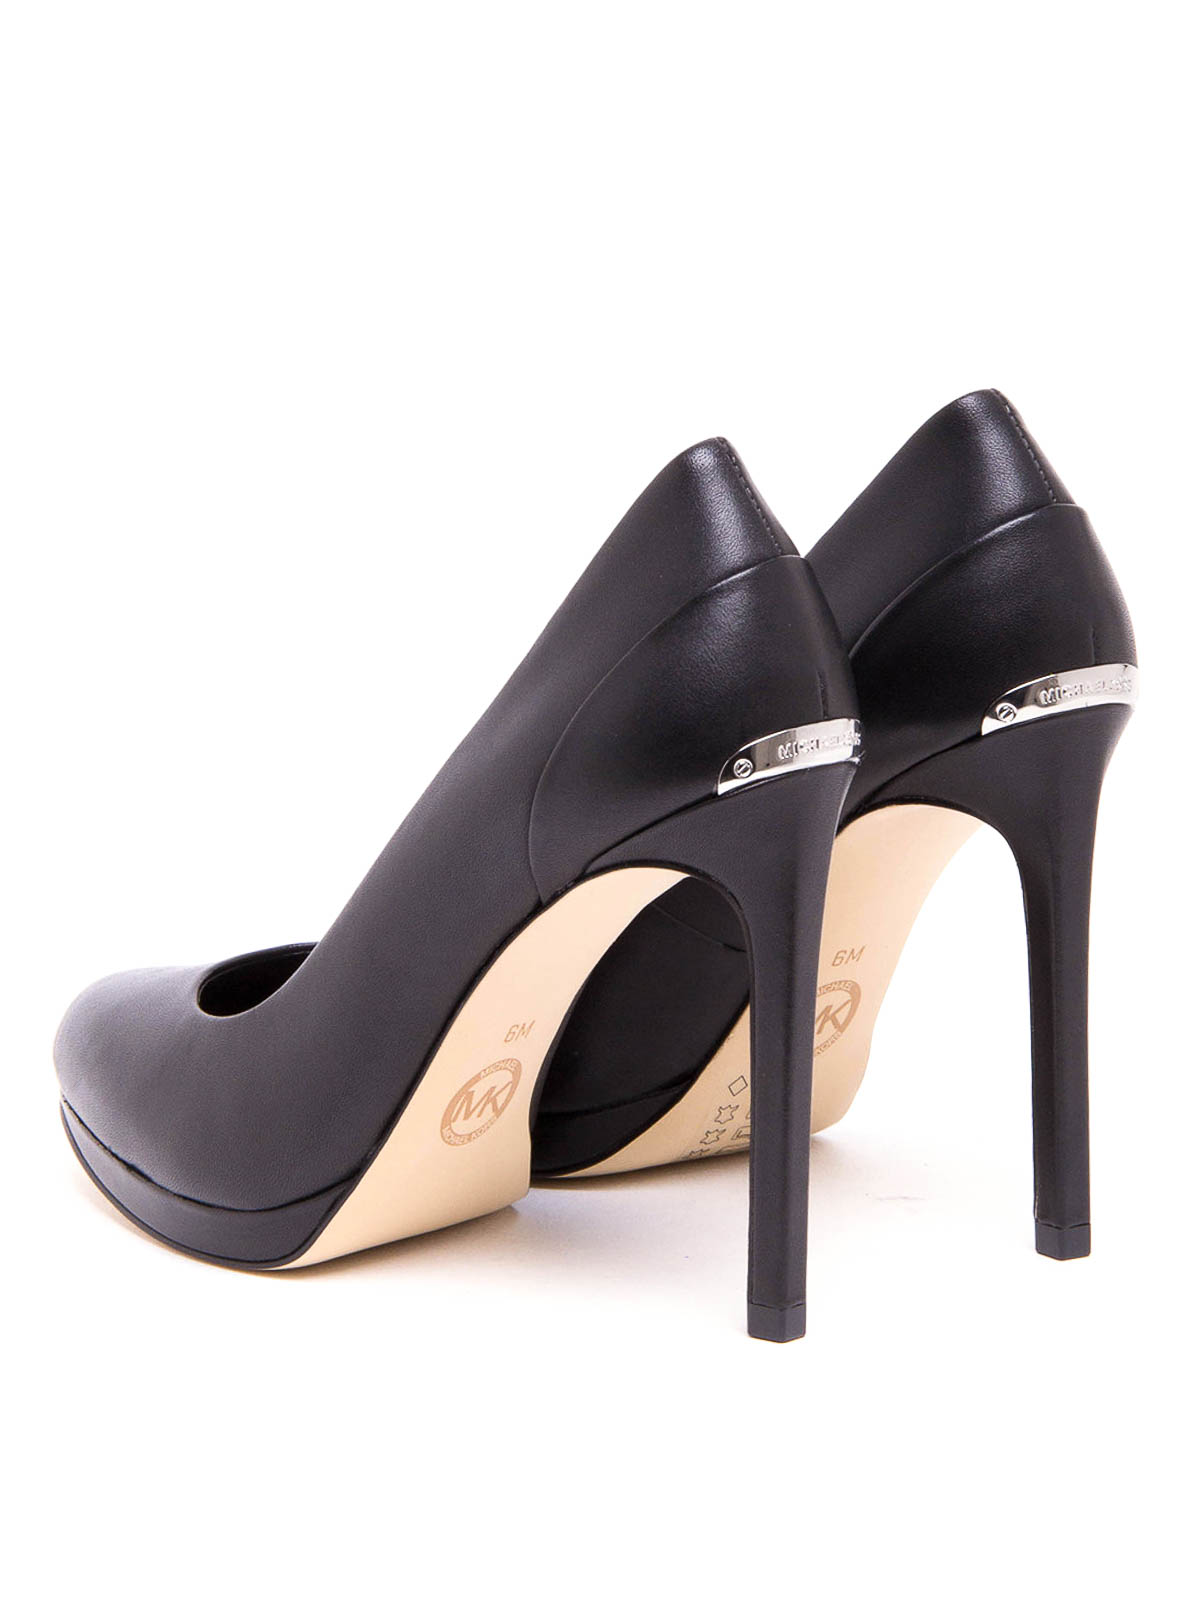 Bank Puno onregelmatig Court shoes Michael Kors - Yasmin smooth leather pumps - 40F6YAHP1L999